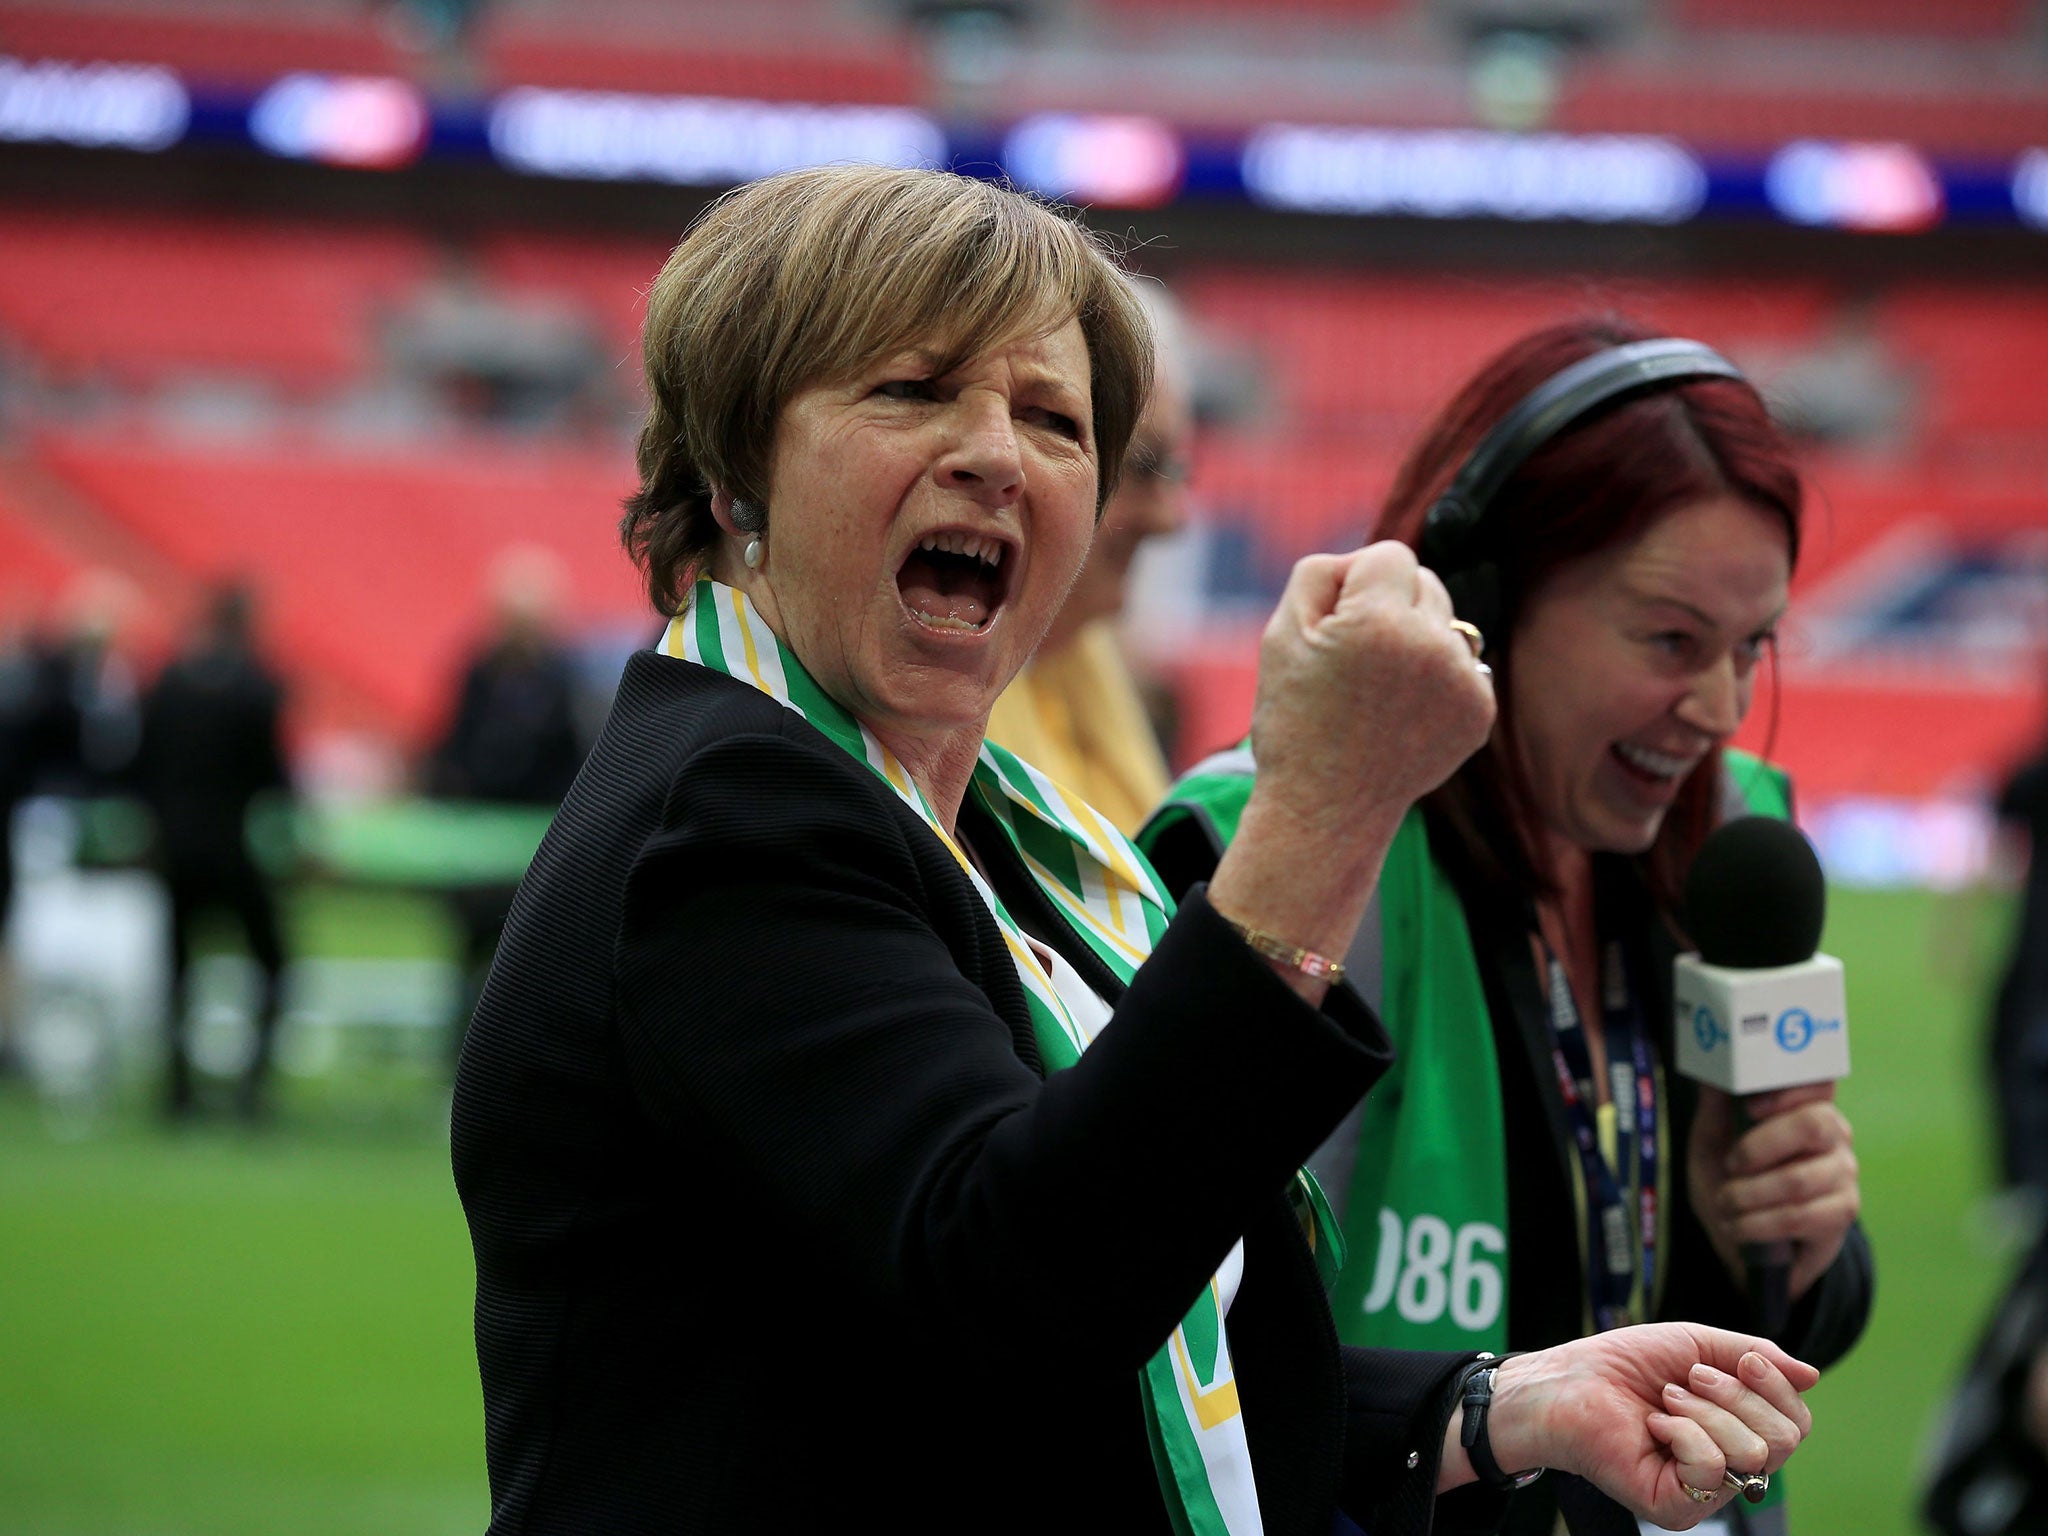 Norwich City majority shareholder Delia Smith celebrates after the match